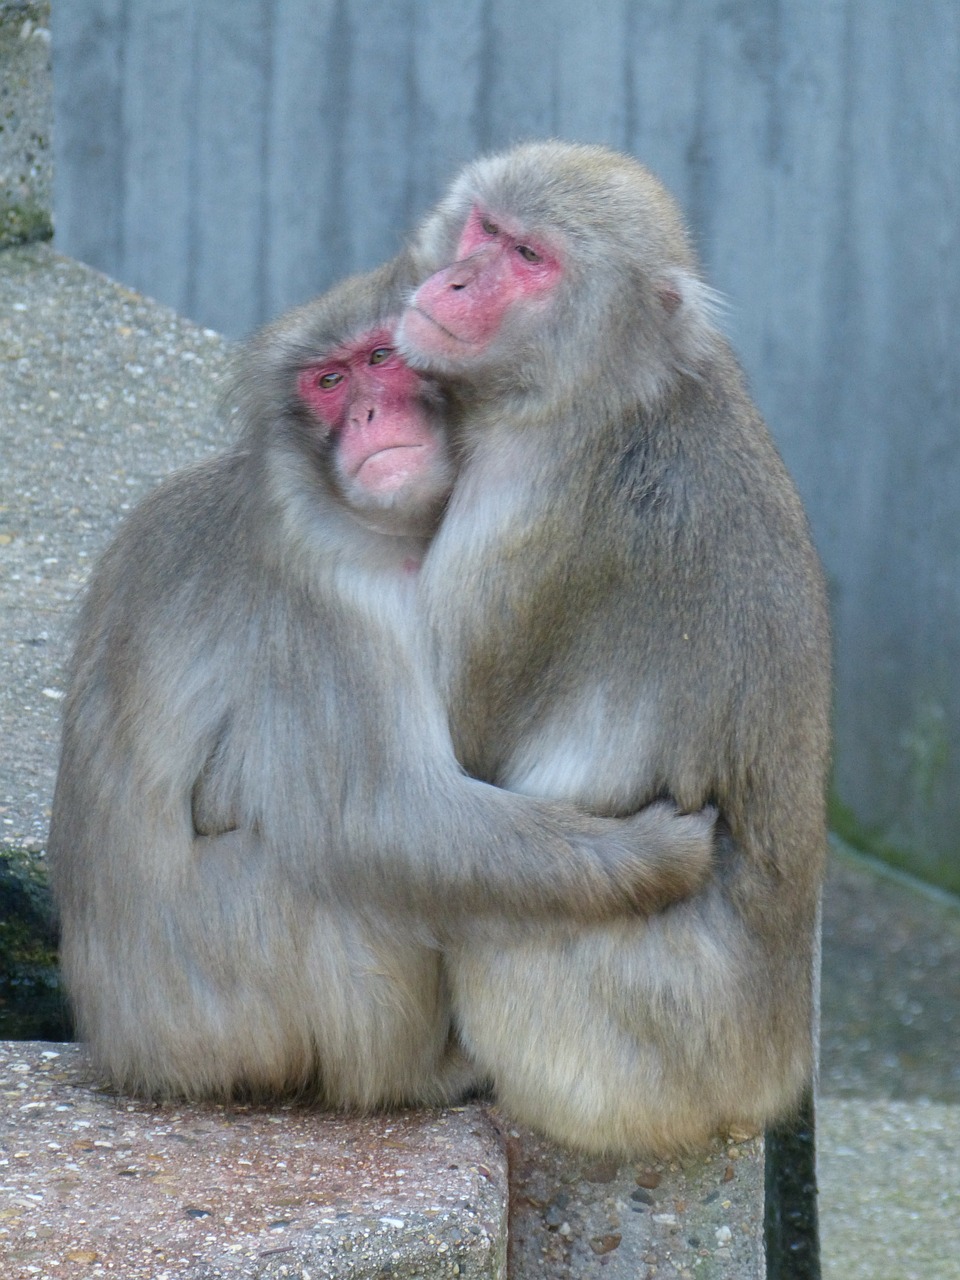 red face macaque macaca fuscata ape free photo